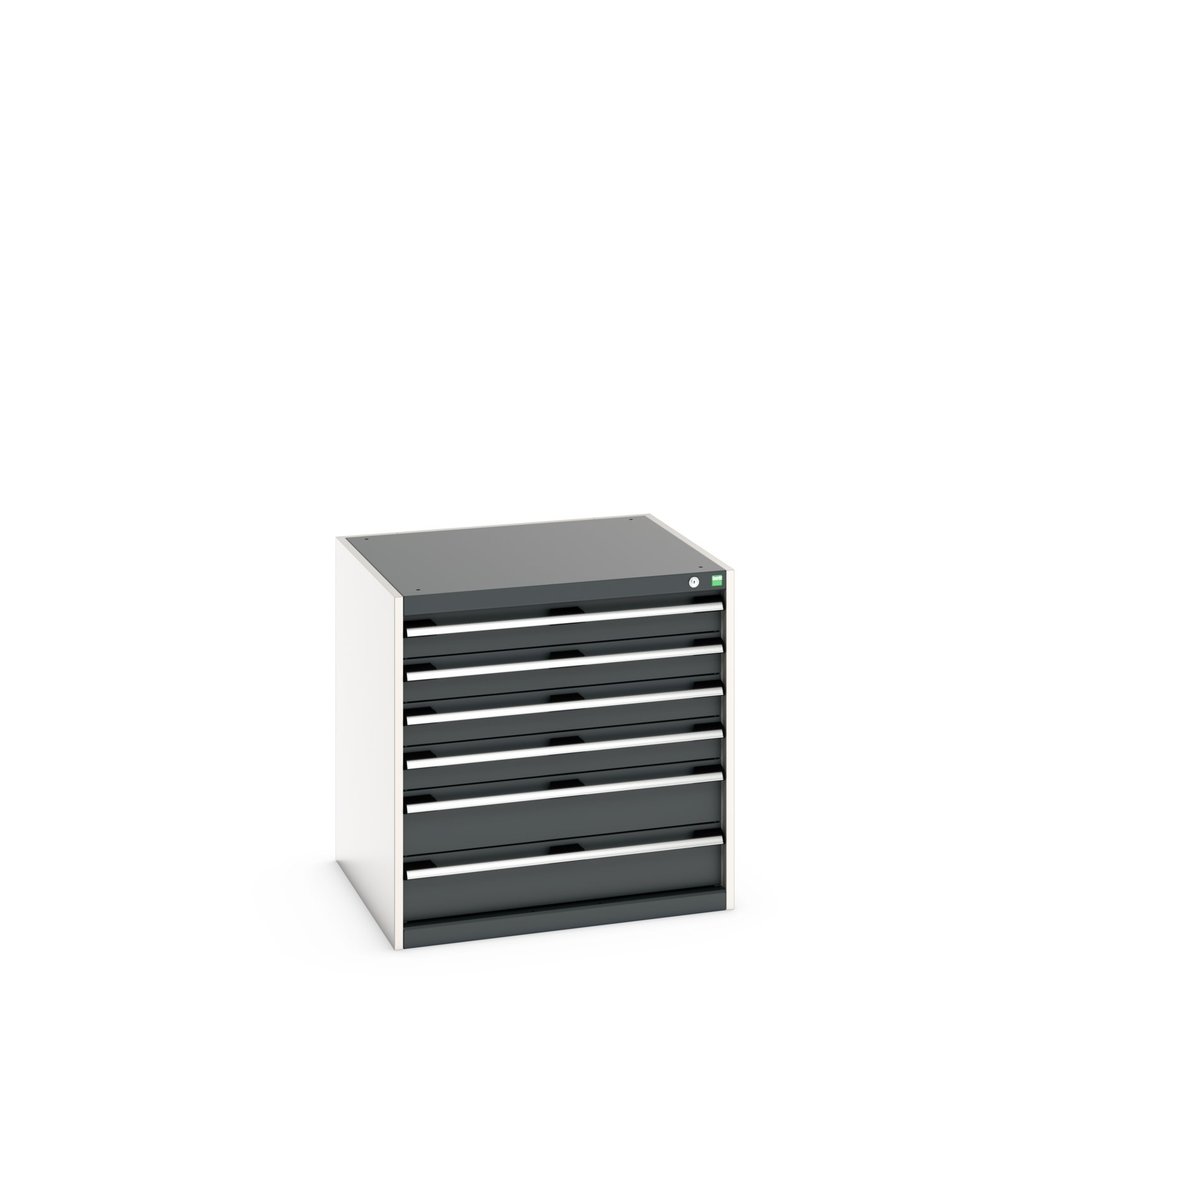 40028102. - cubio drawer cabinet